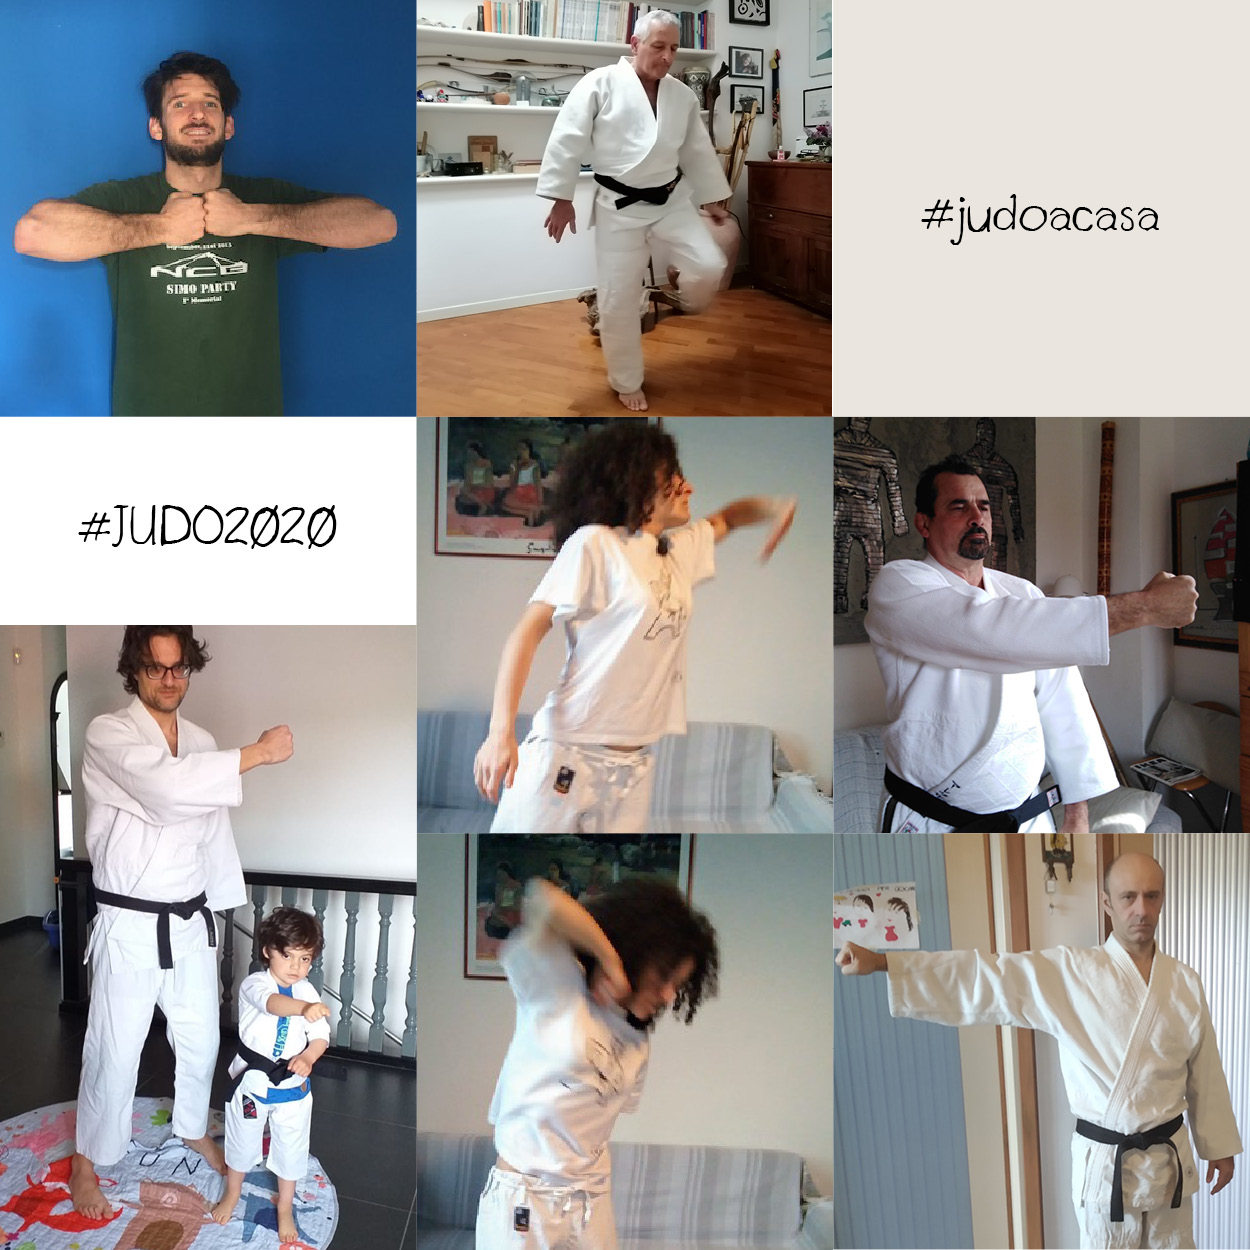 judoacasa